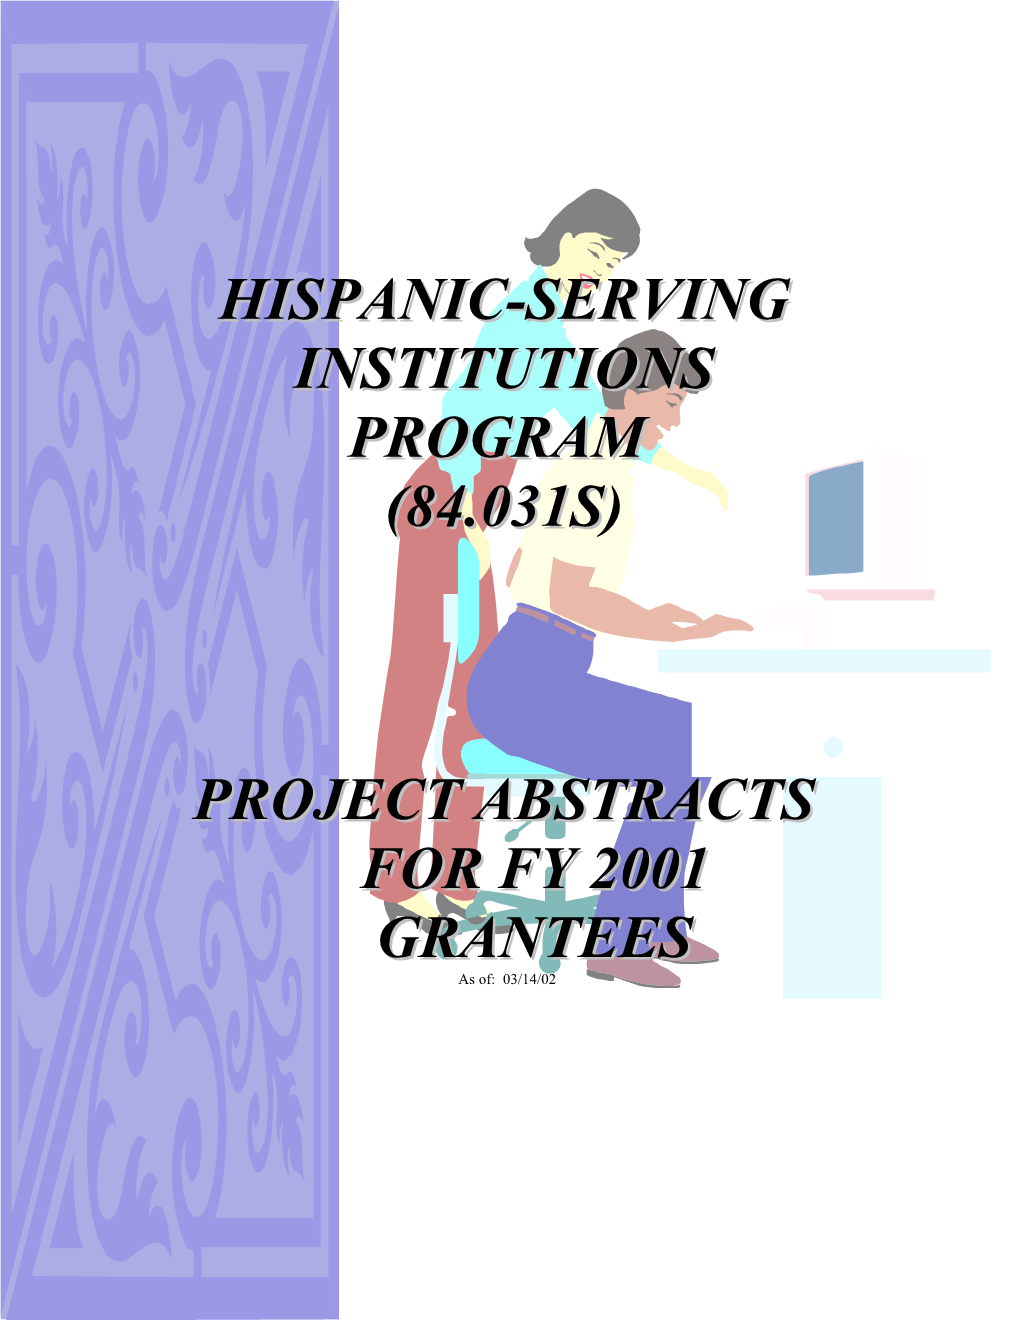 Hispanic-Serving Institutions Program